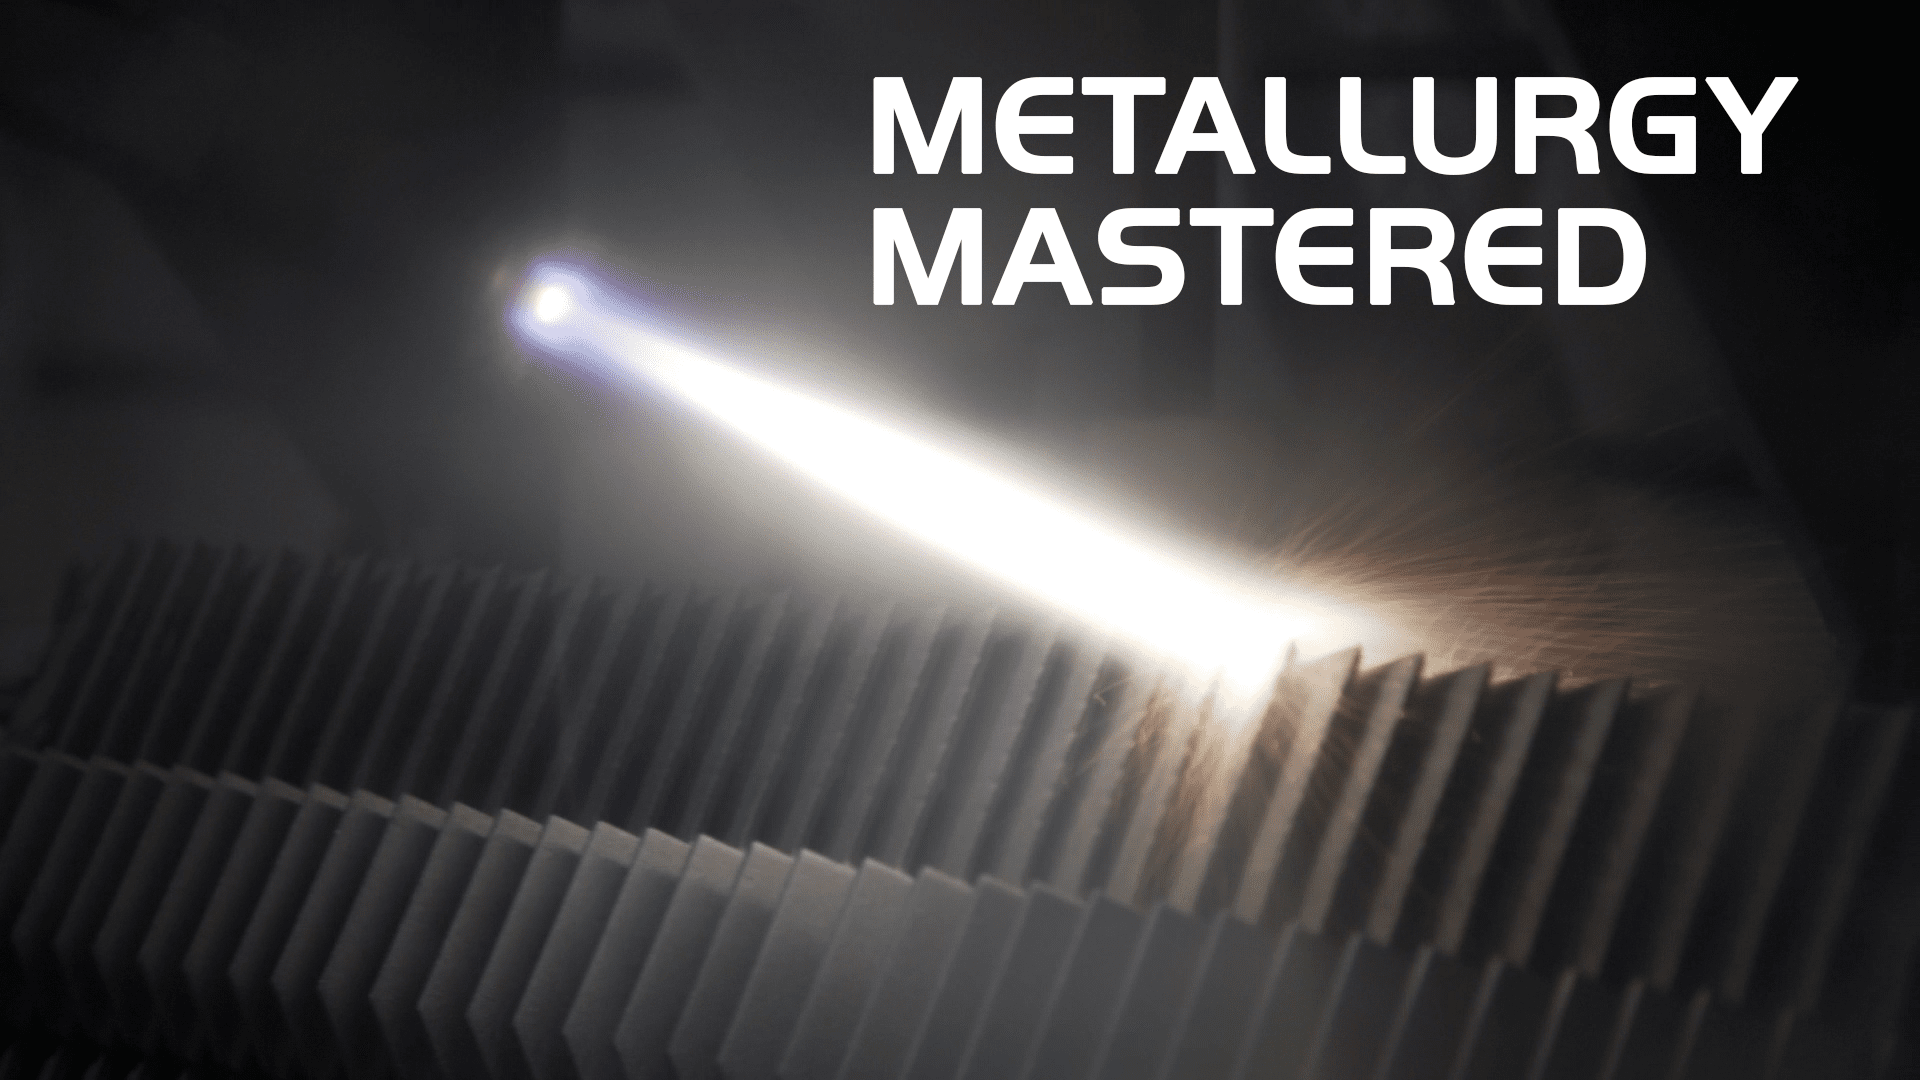 Metallurgy Mastered